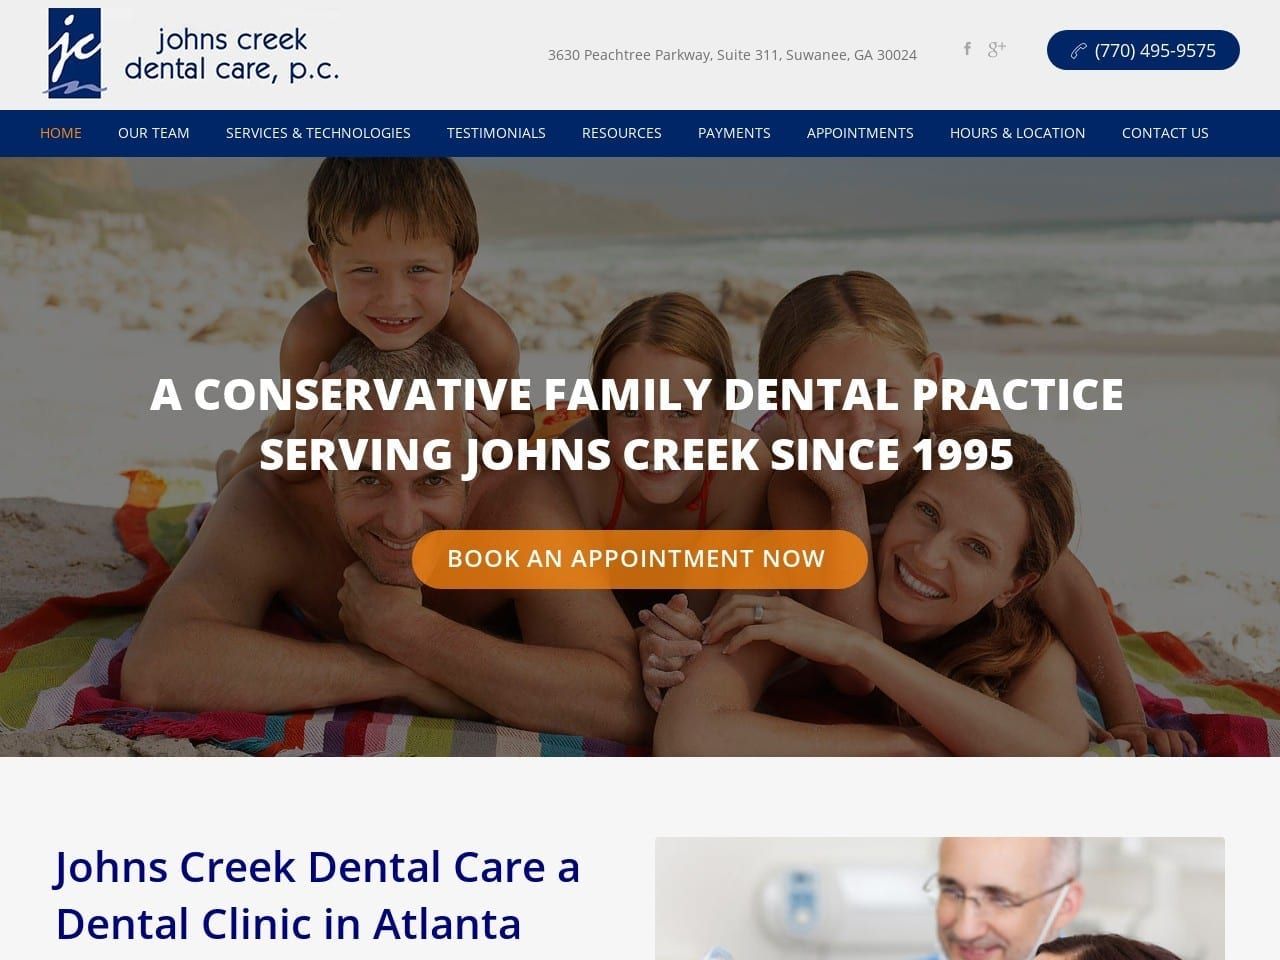 Johns Creek Dental Care Website Screenshot from johnscreekdental.com